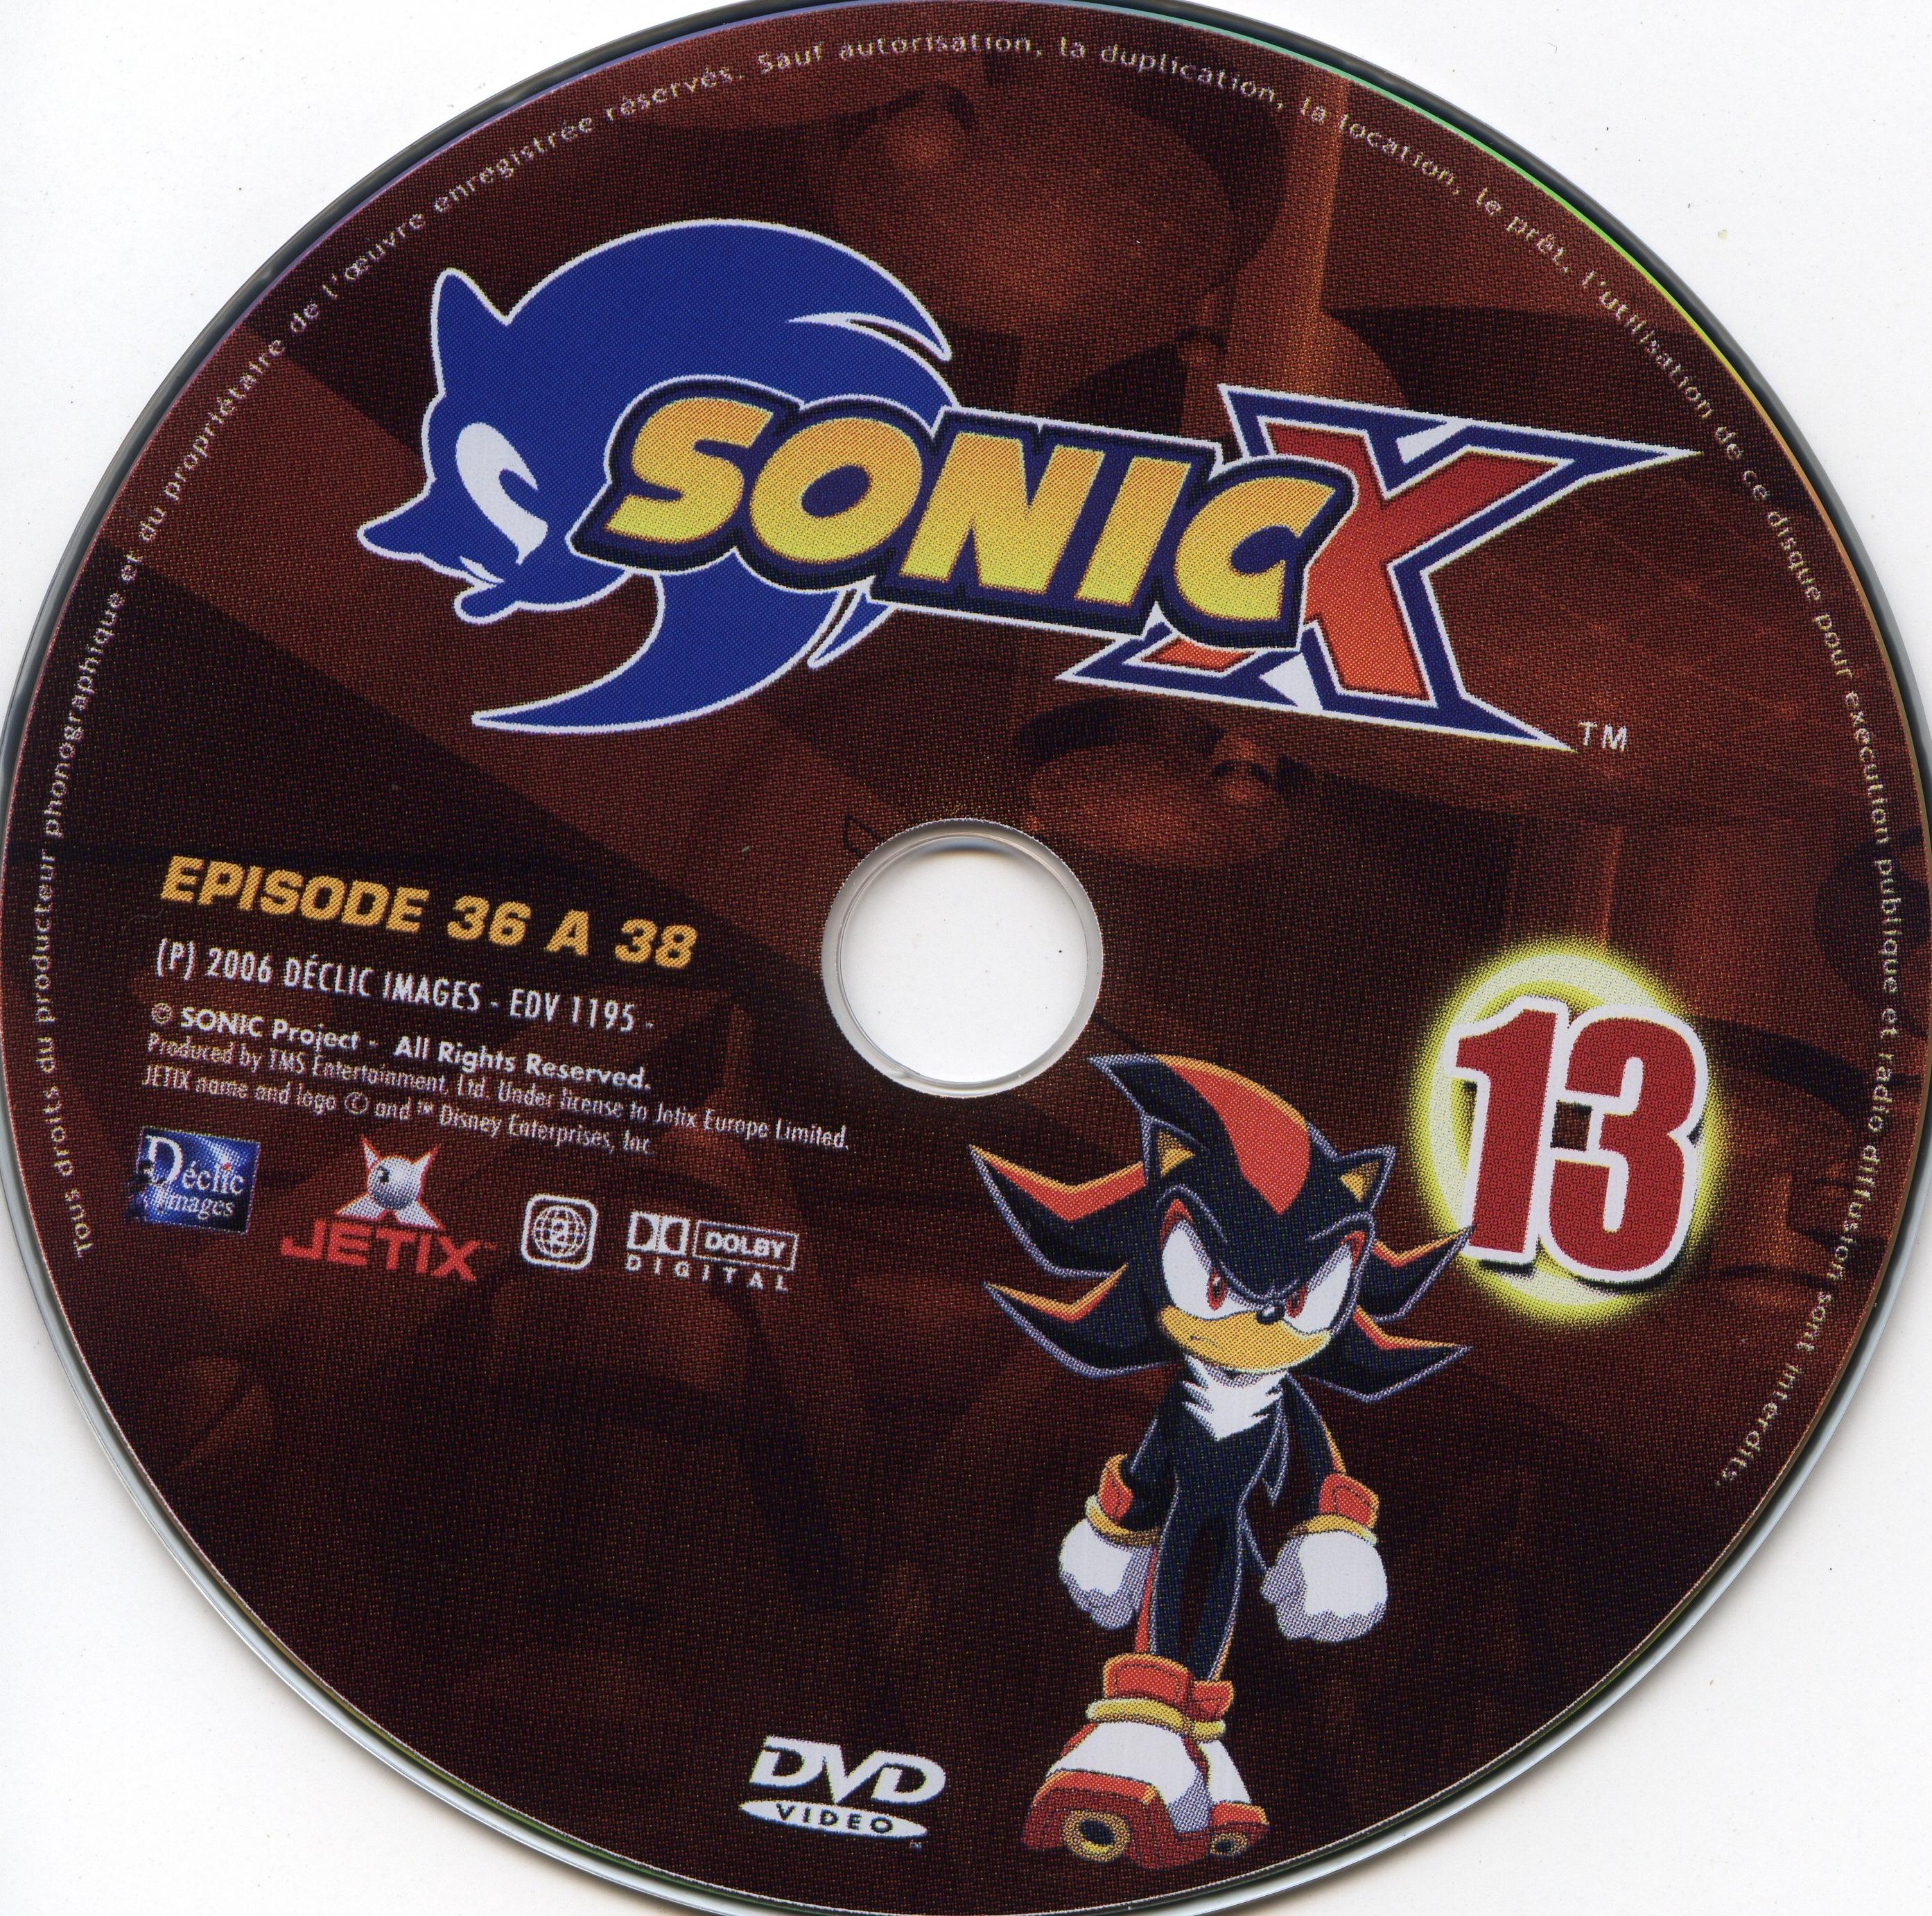 Sonic X vol 13